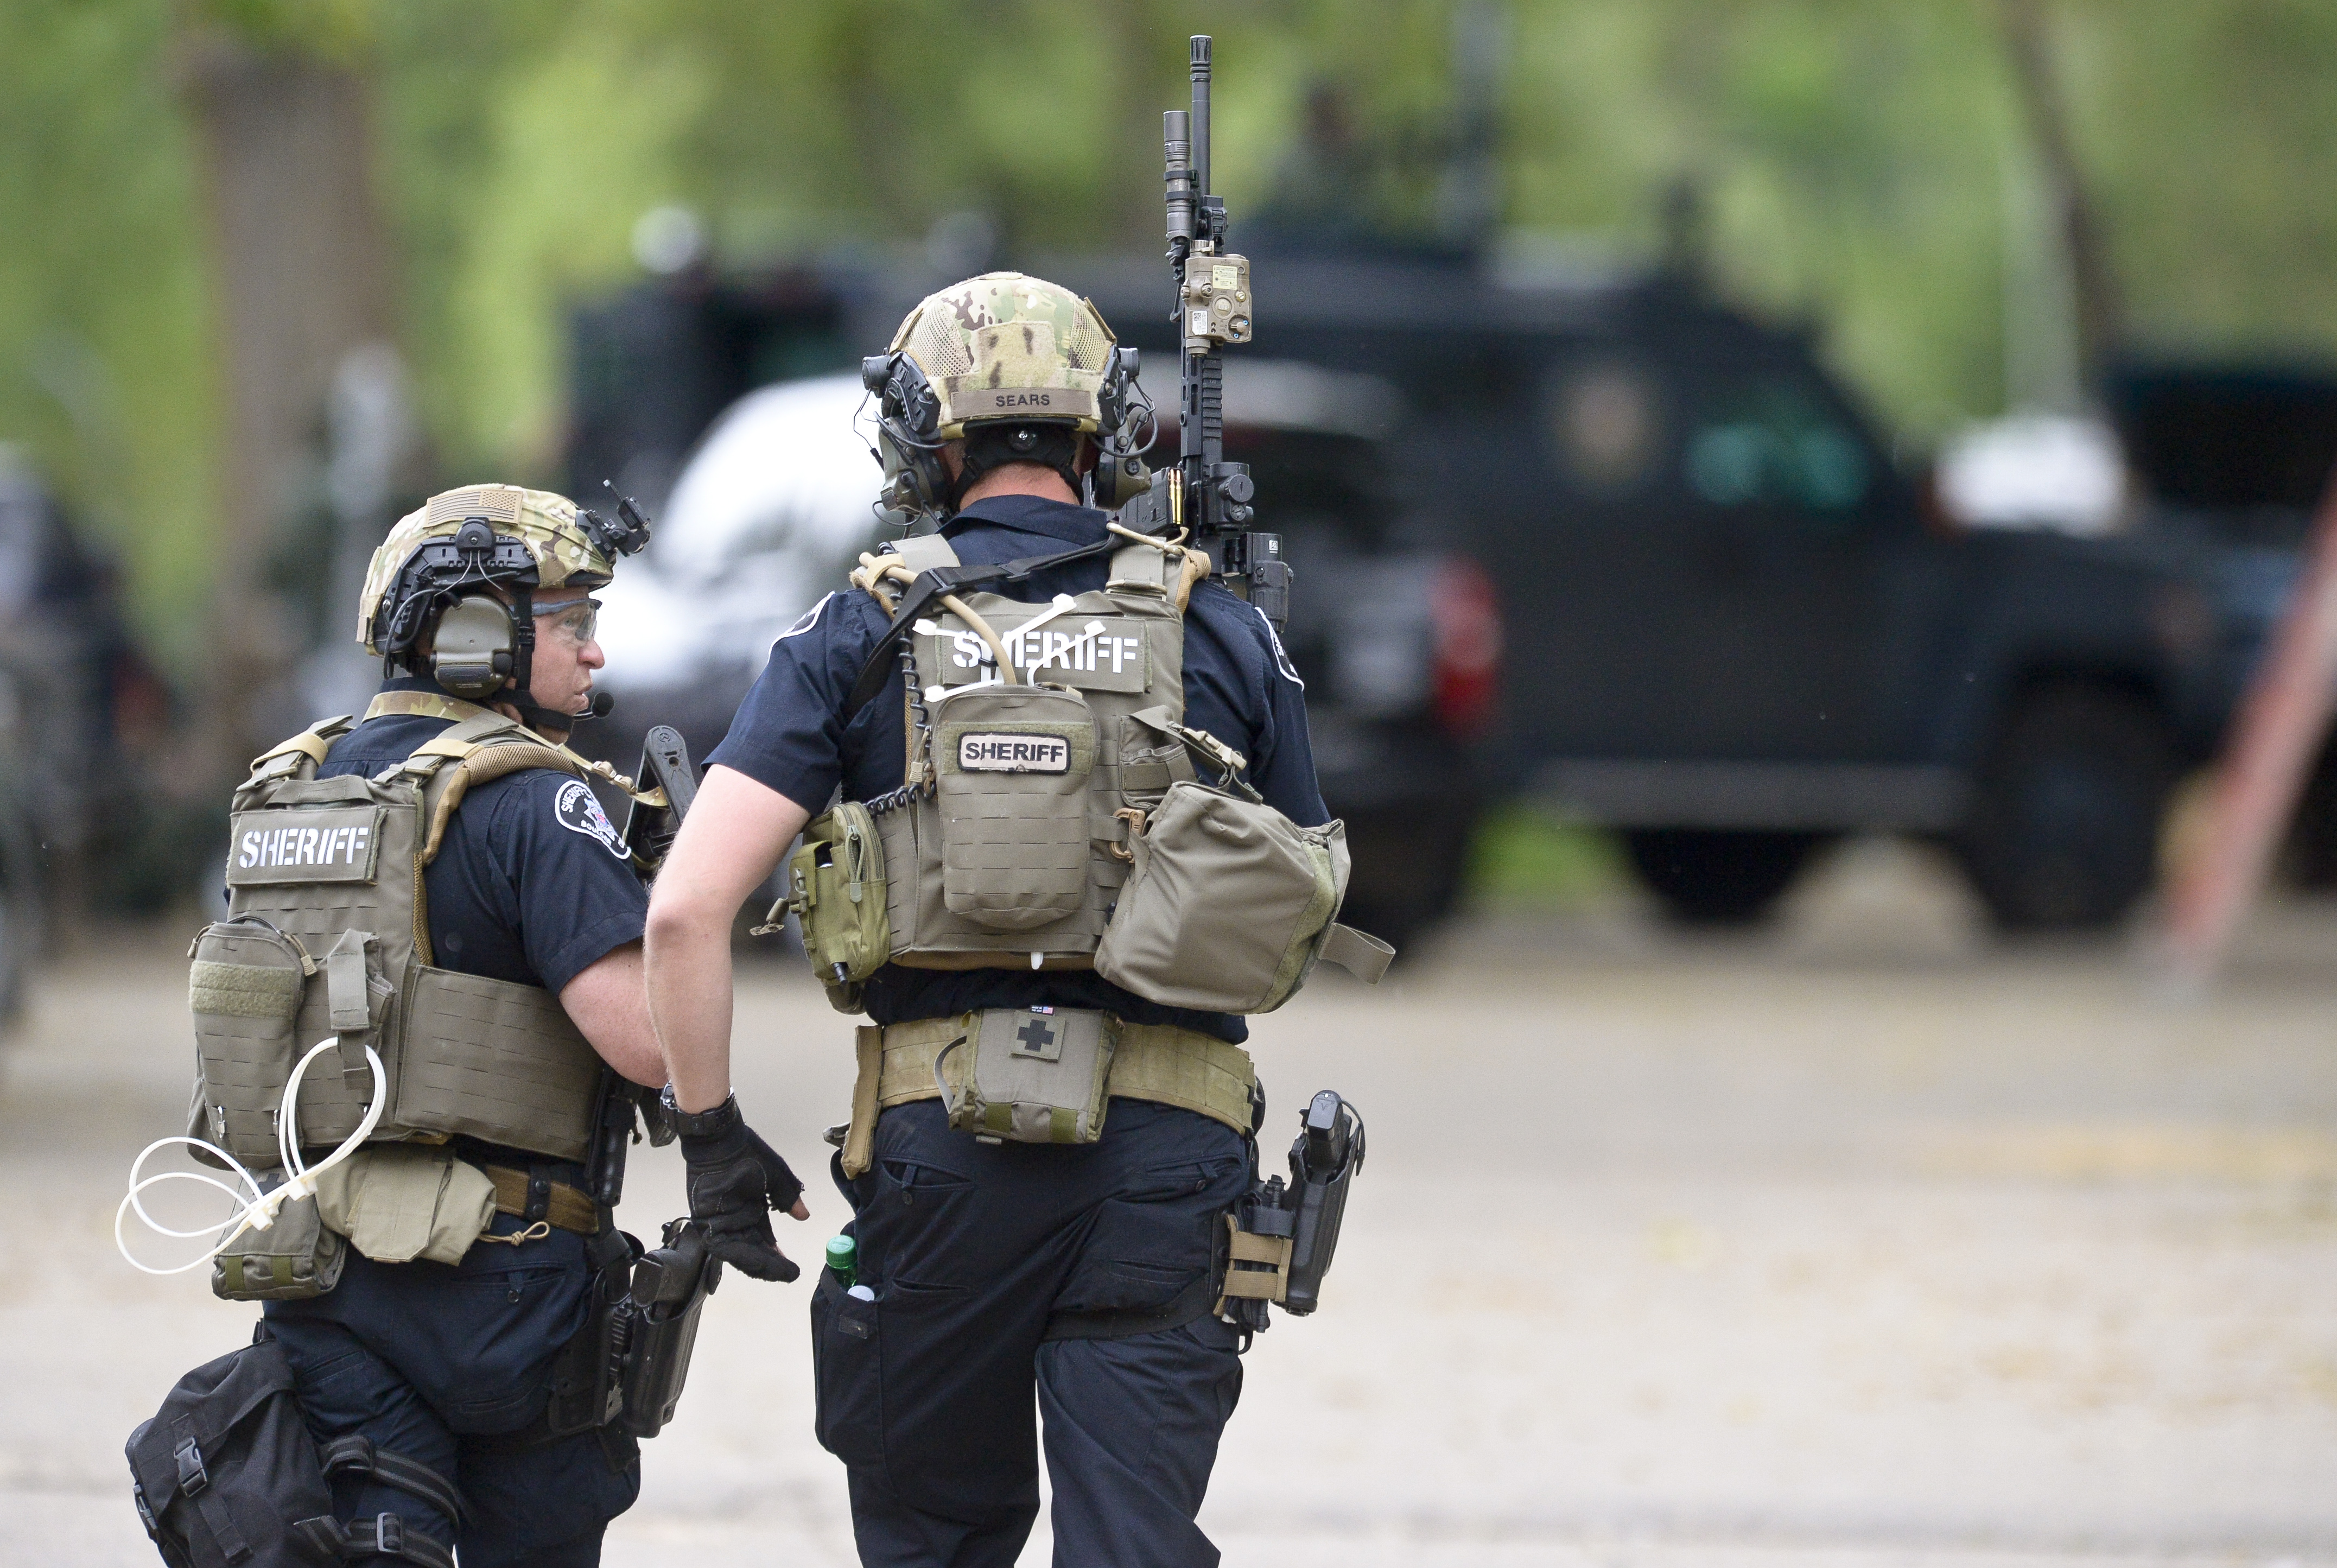 Man escapes during Longmont SWAT standoff – The Denver Post